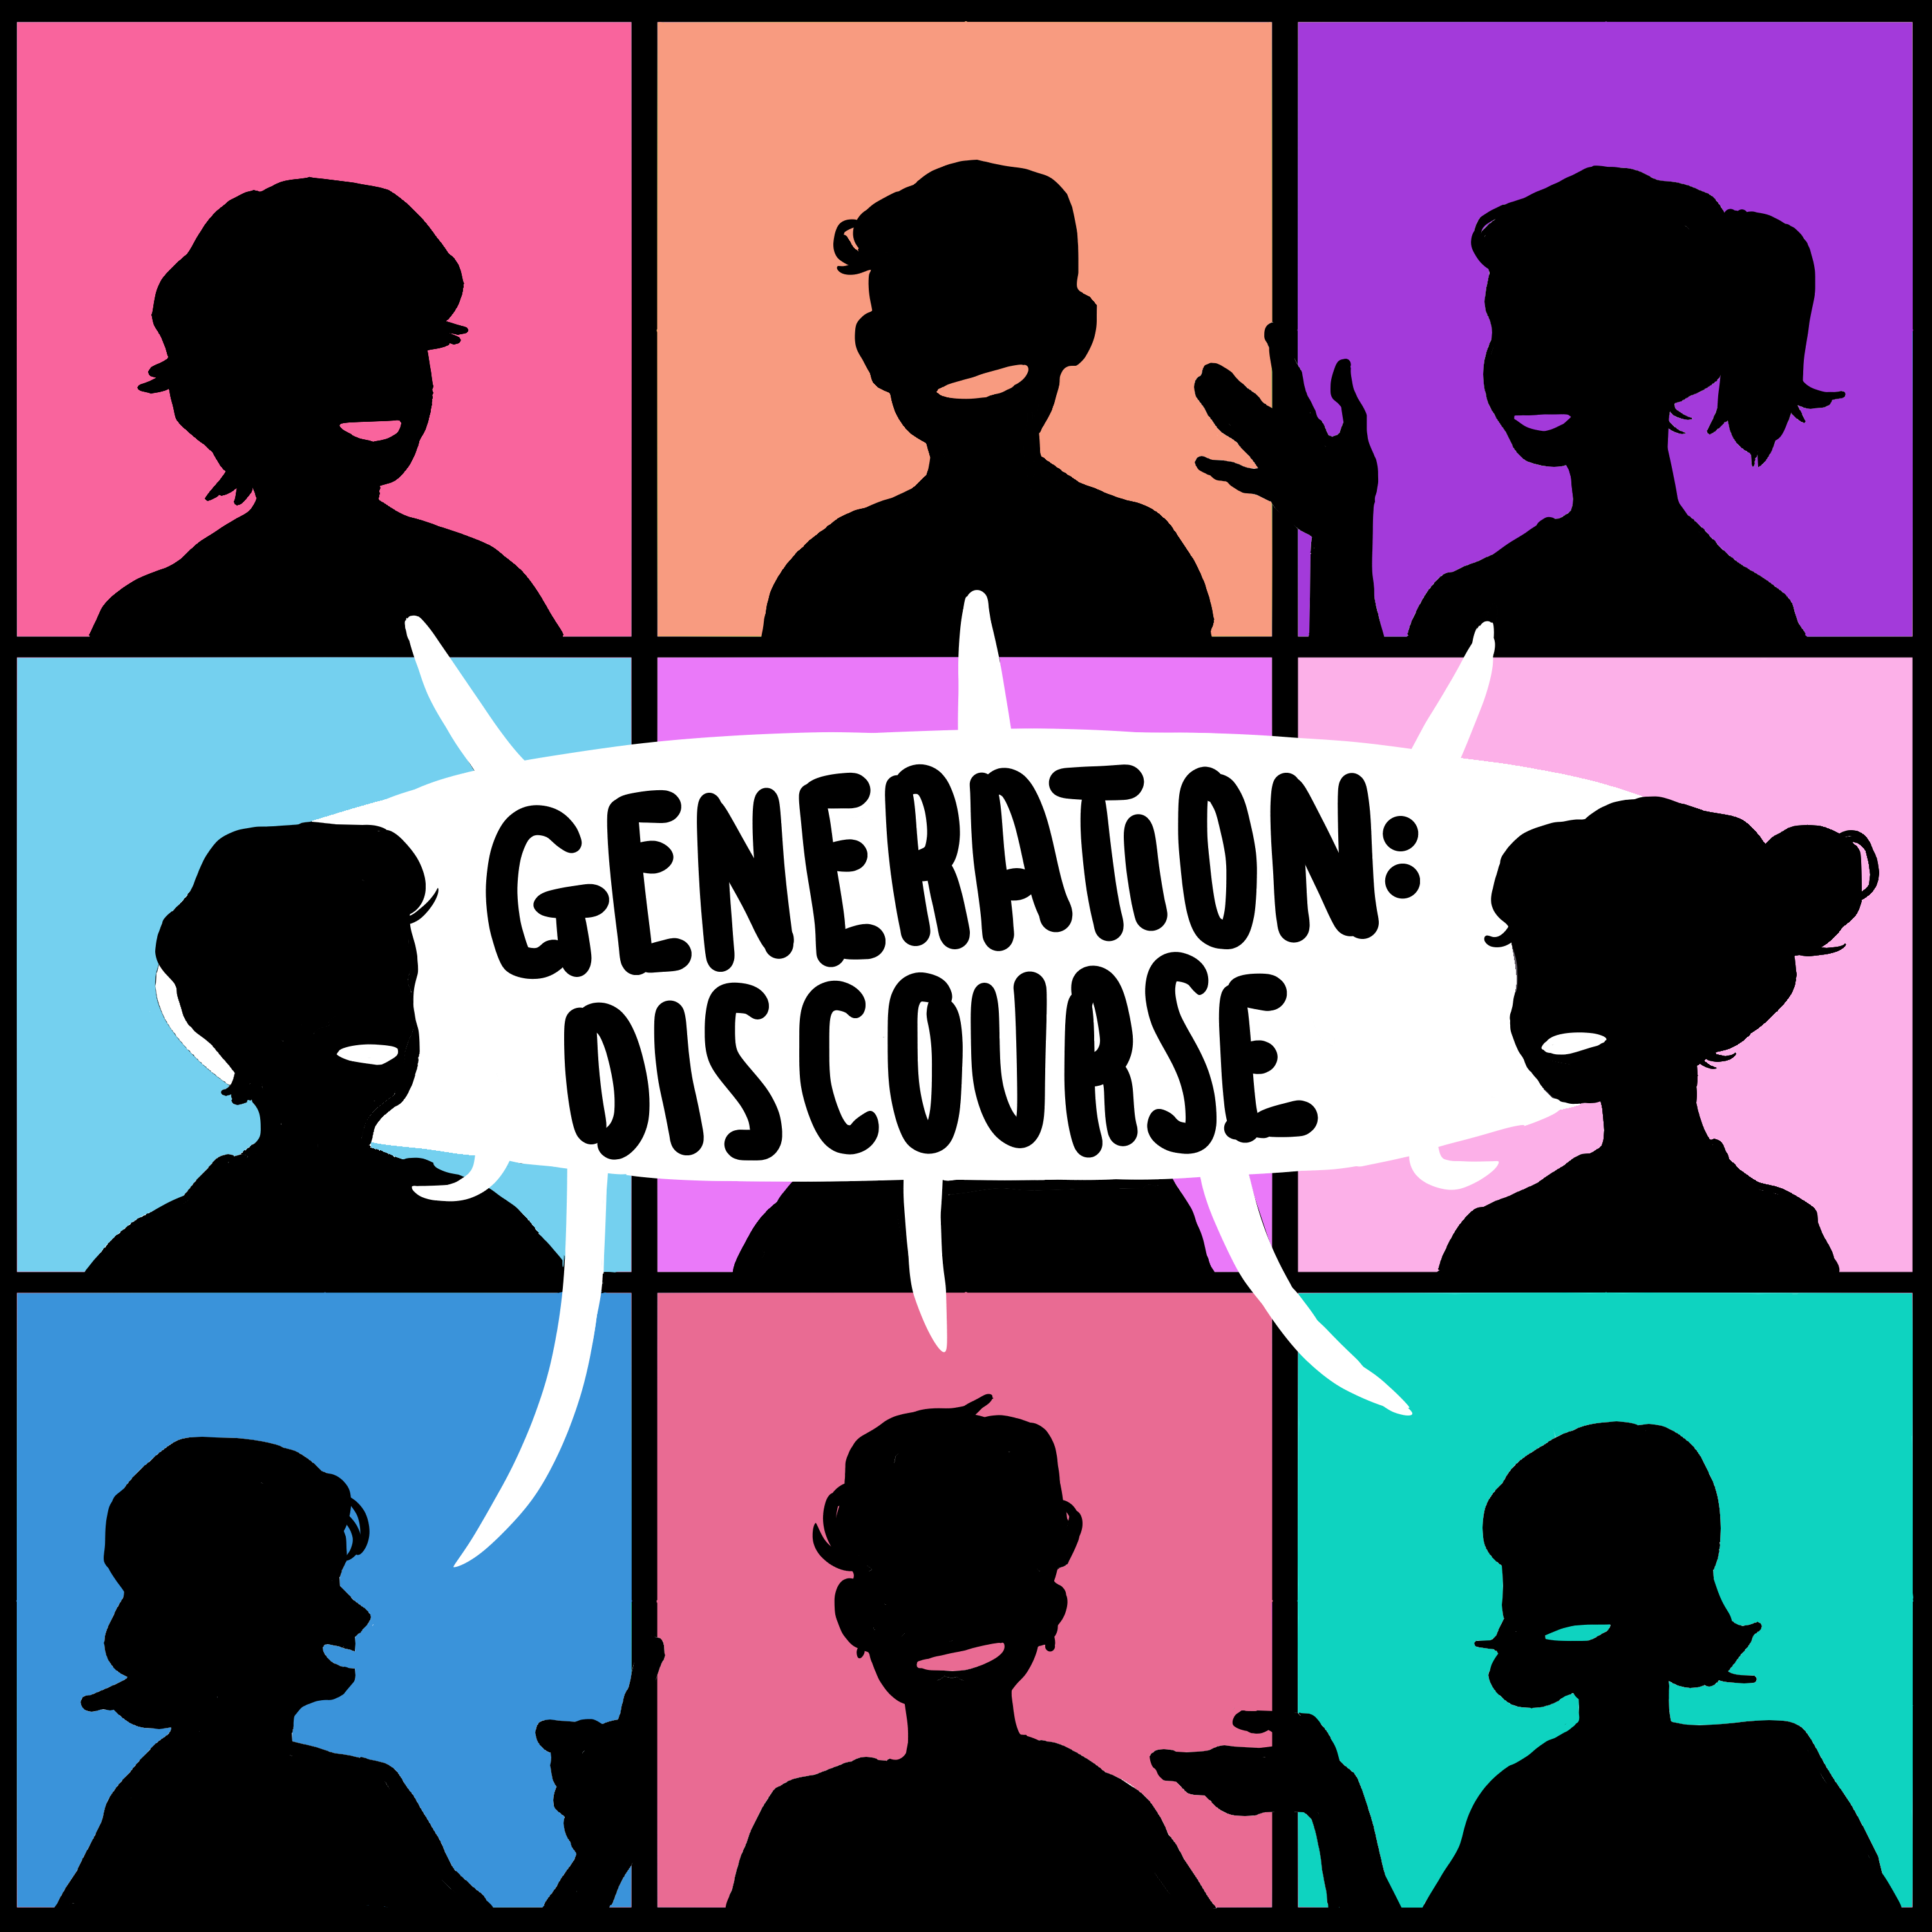 Generation: Discourse